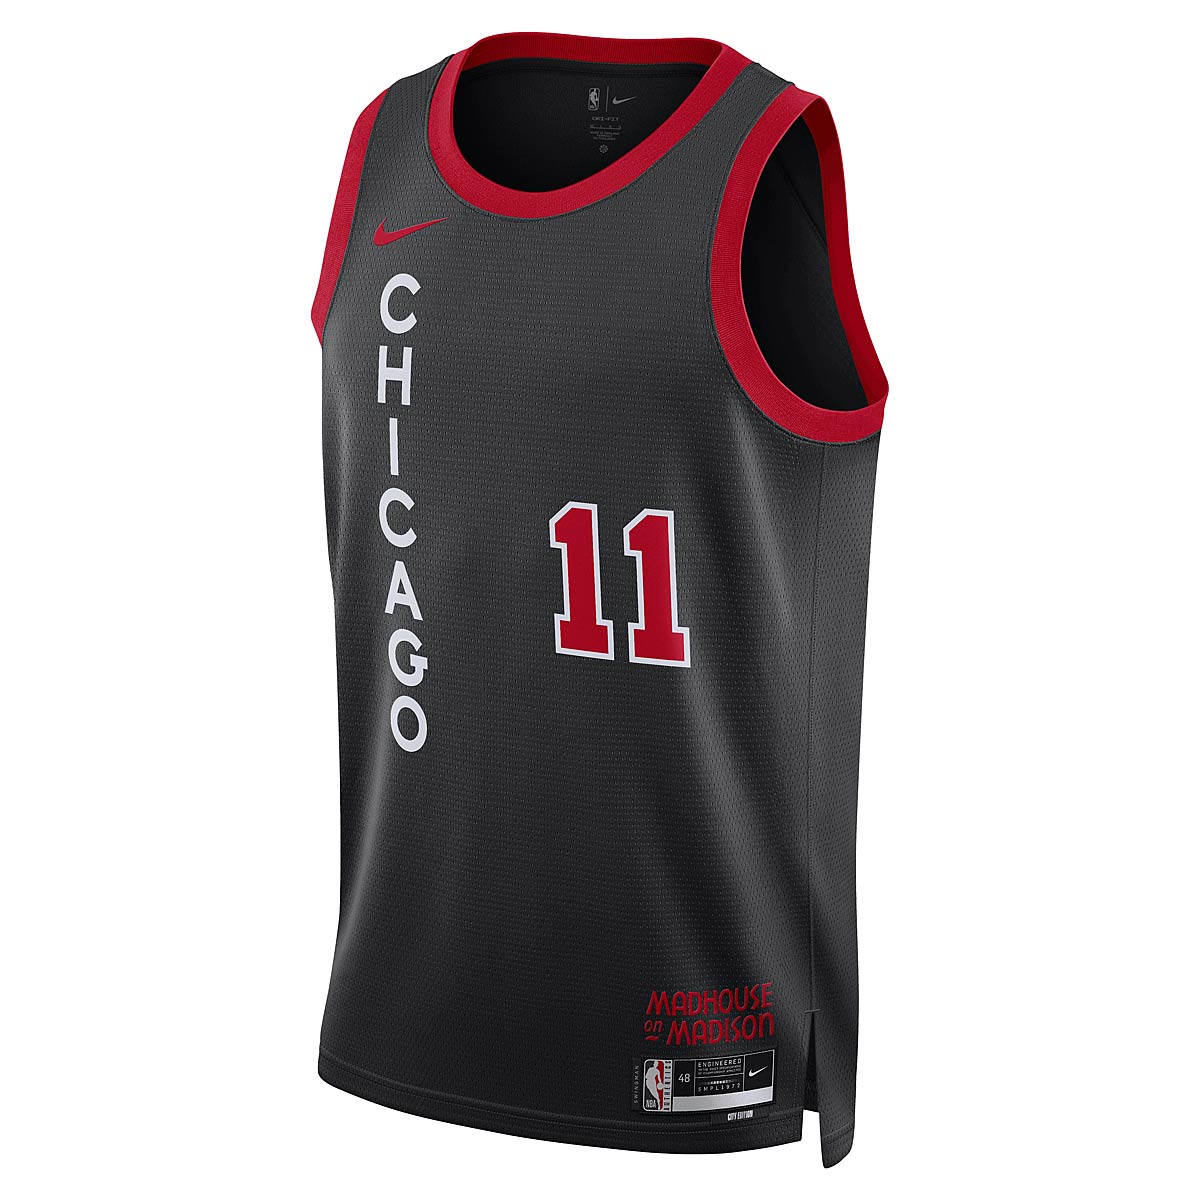 Nike NBA Chicago Bulls Dri-fit City Edition Swingman Jersey Demar Derozan, Schwarz/university Rot/schwarz M